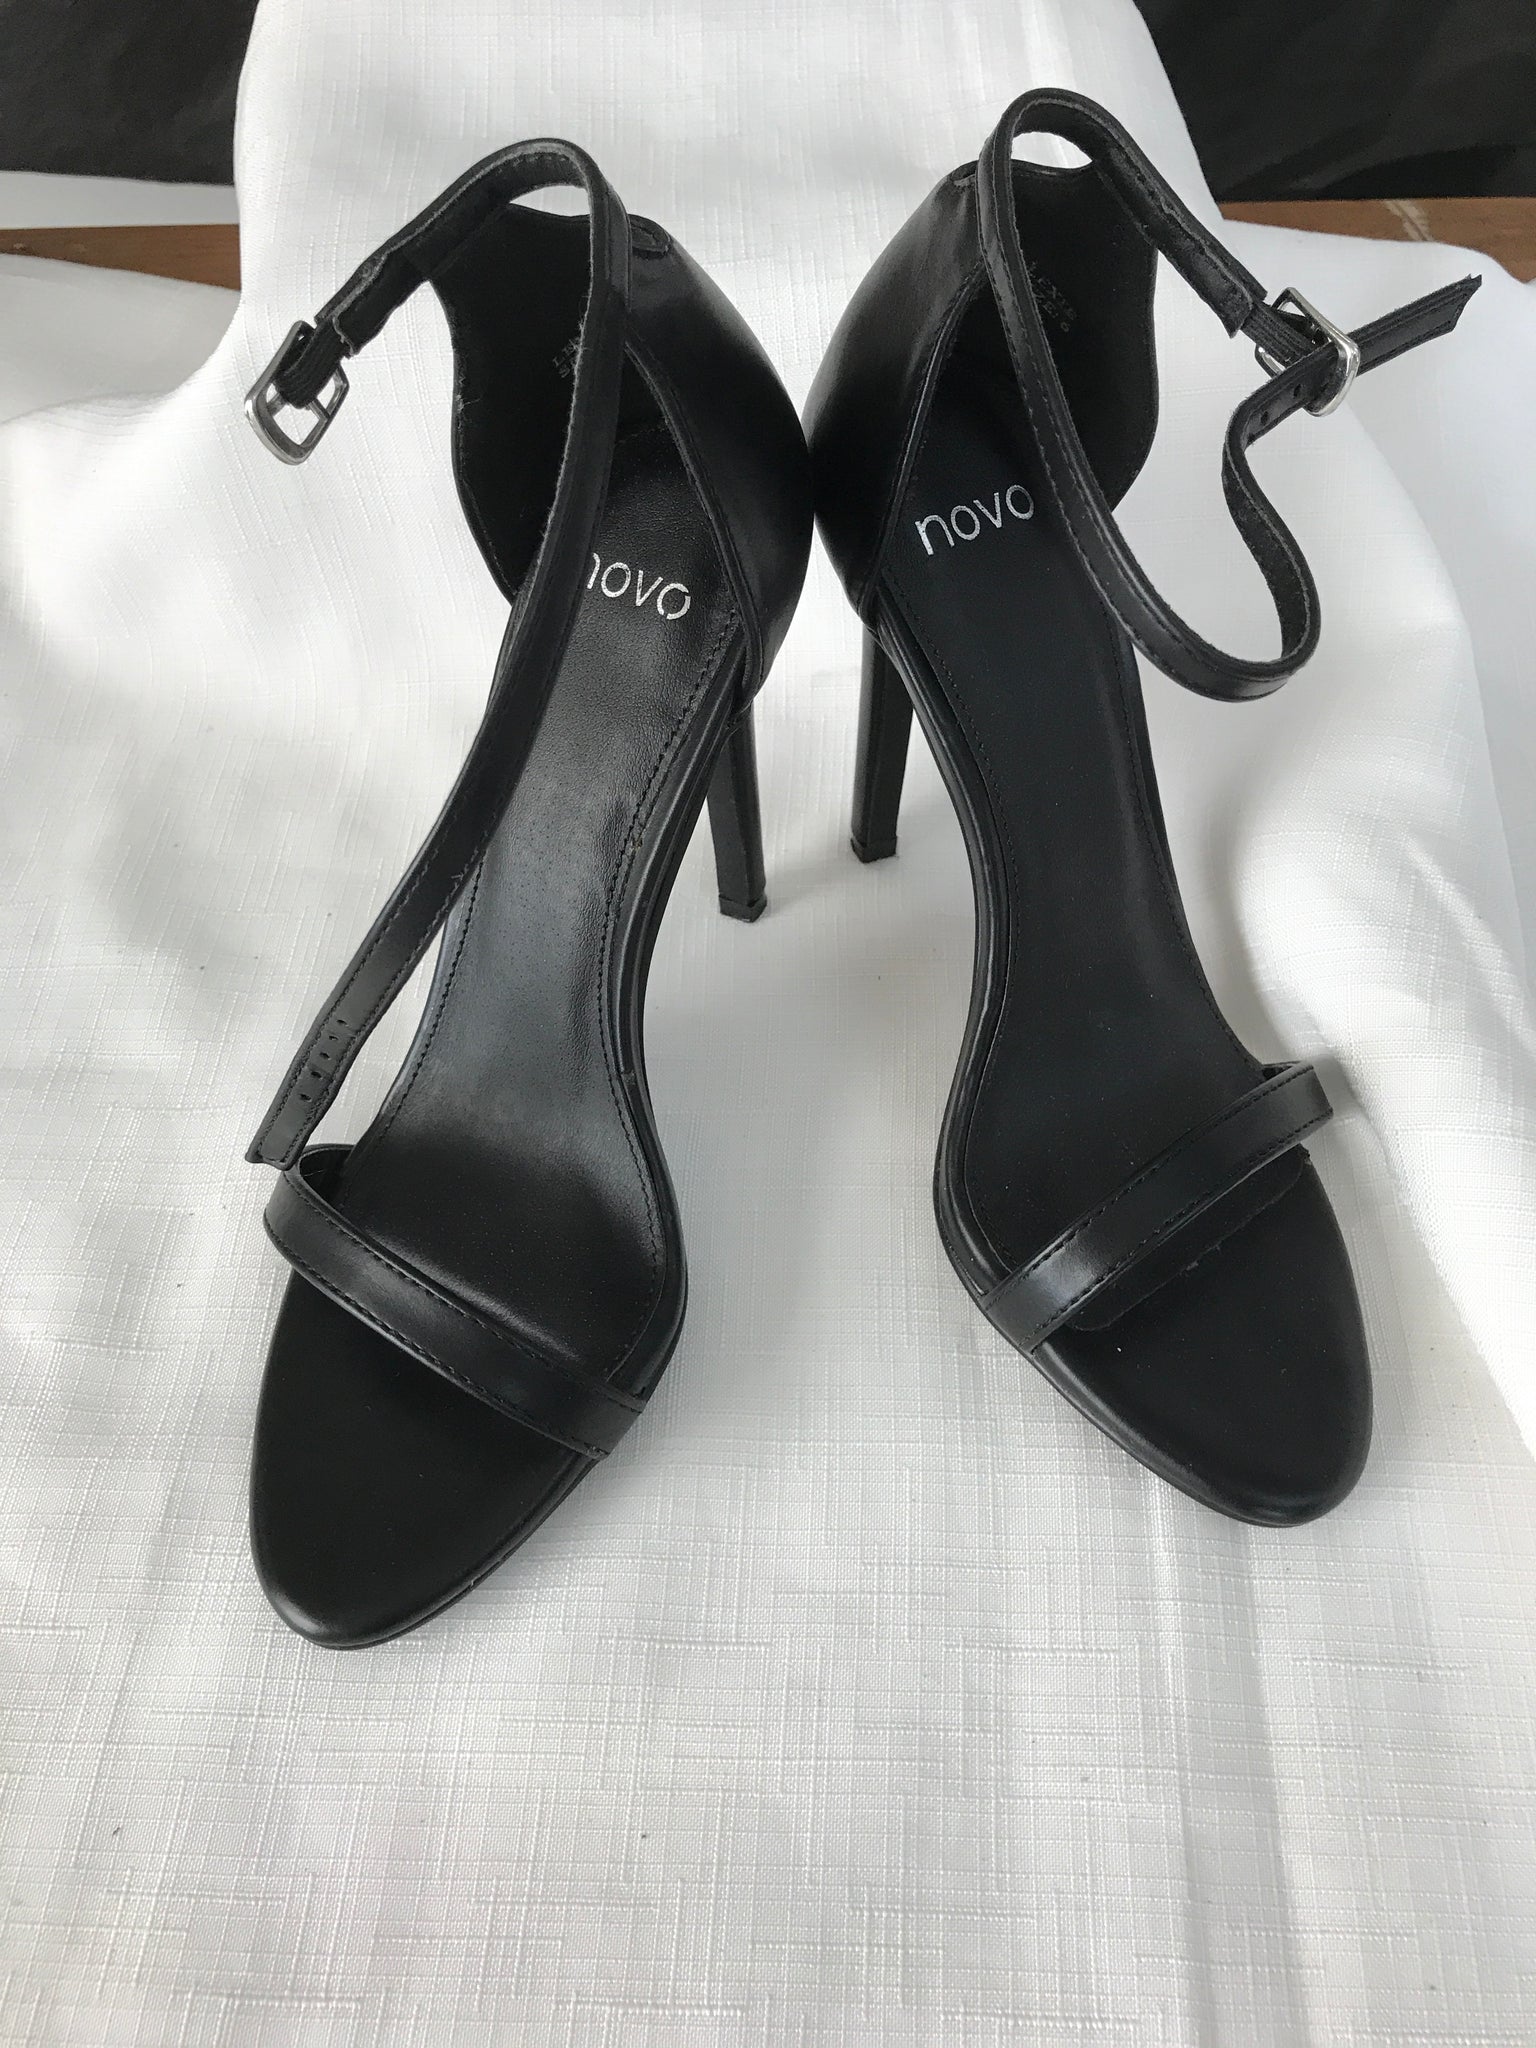 novo white heels